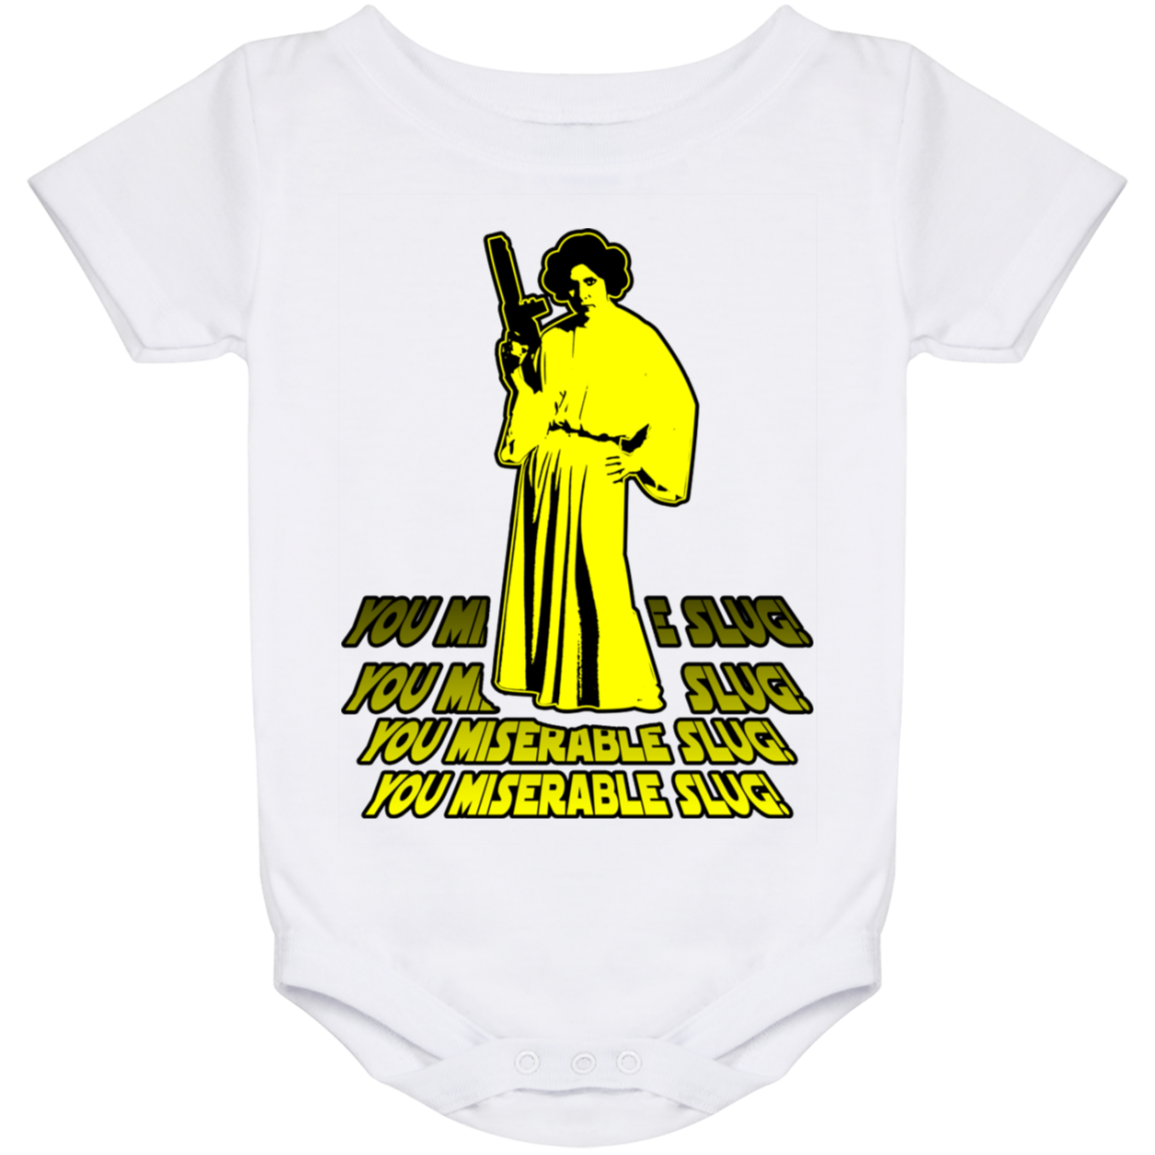 ArtichokeUSA Custom Design. You Miserable Slug. Carrie Fisher Tribute. Star Wars / Blues Brothers Fan Art. Parody. Baby Onesie 24 Month